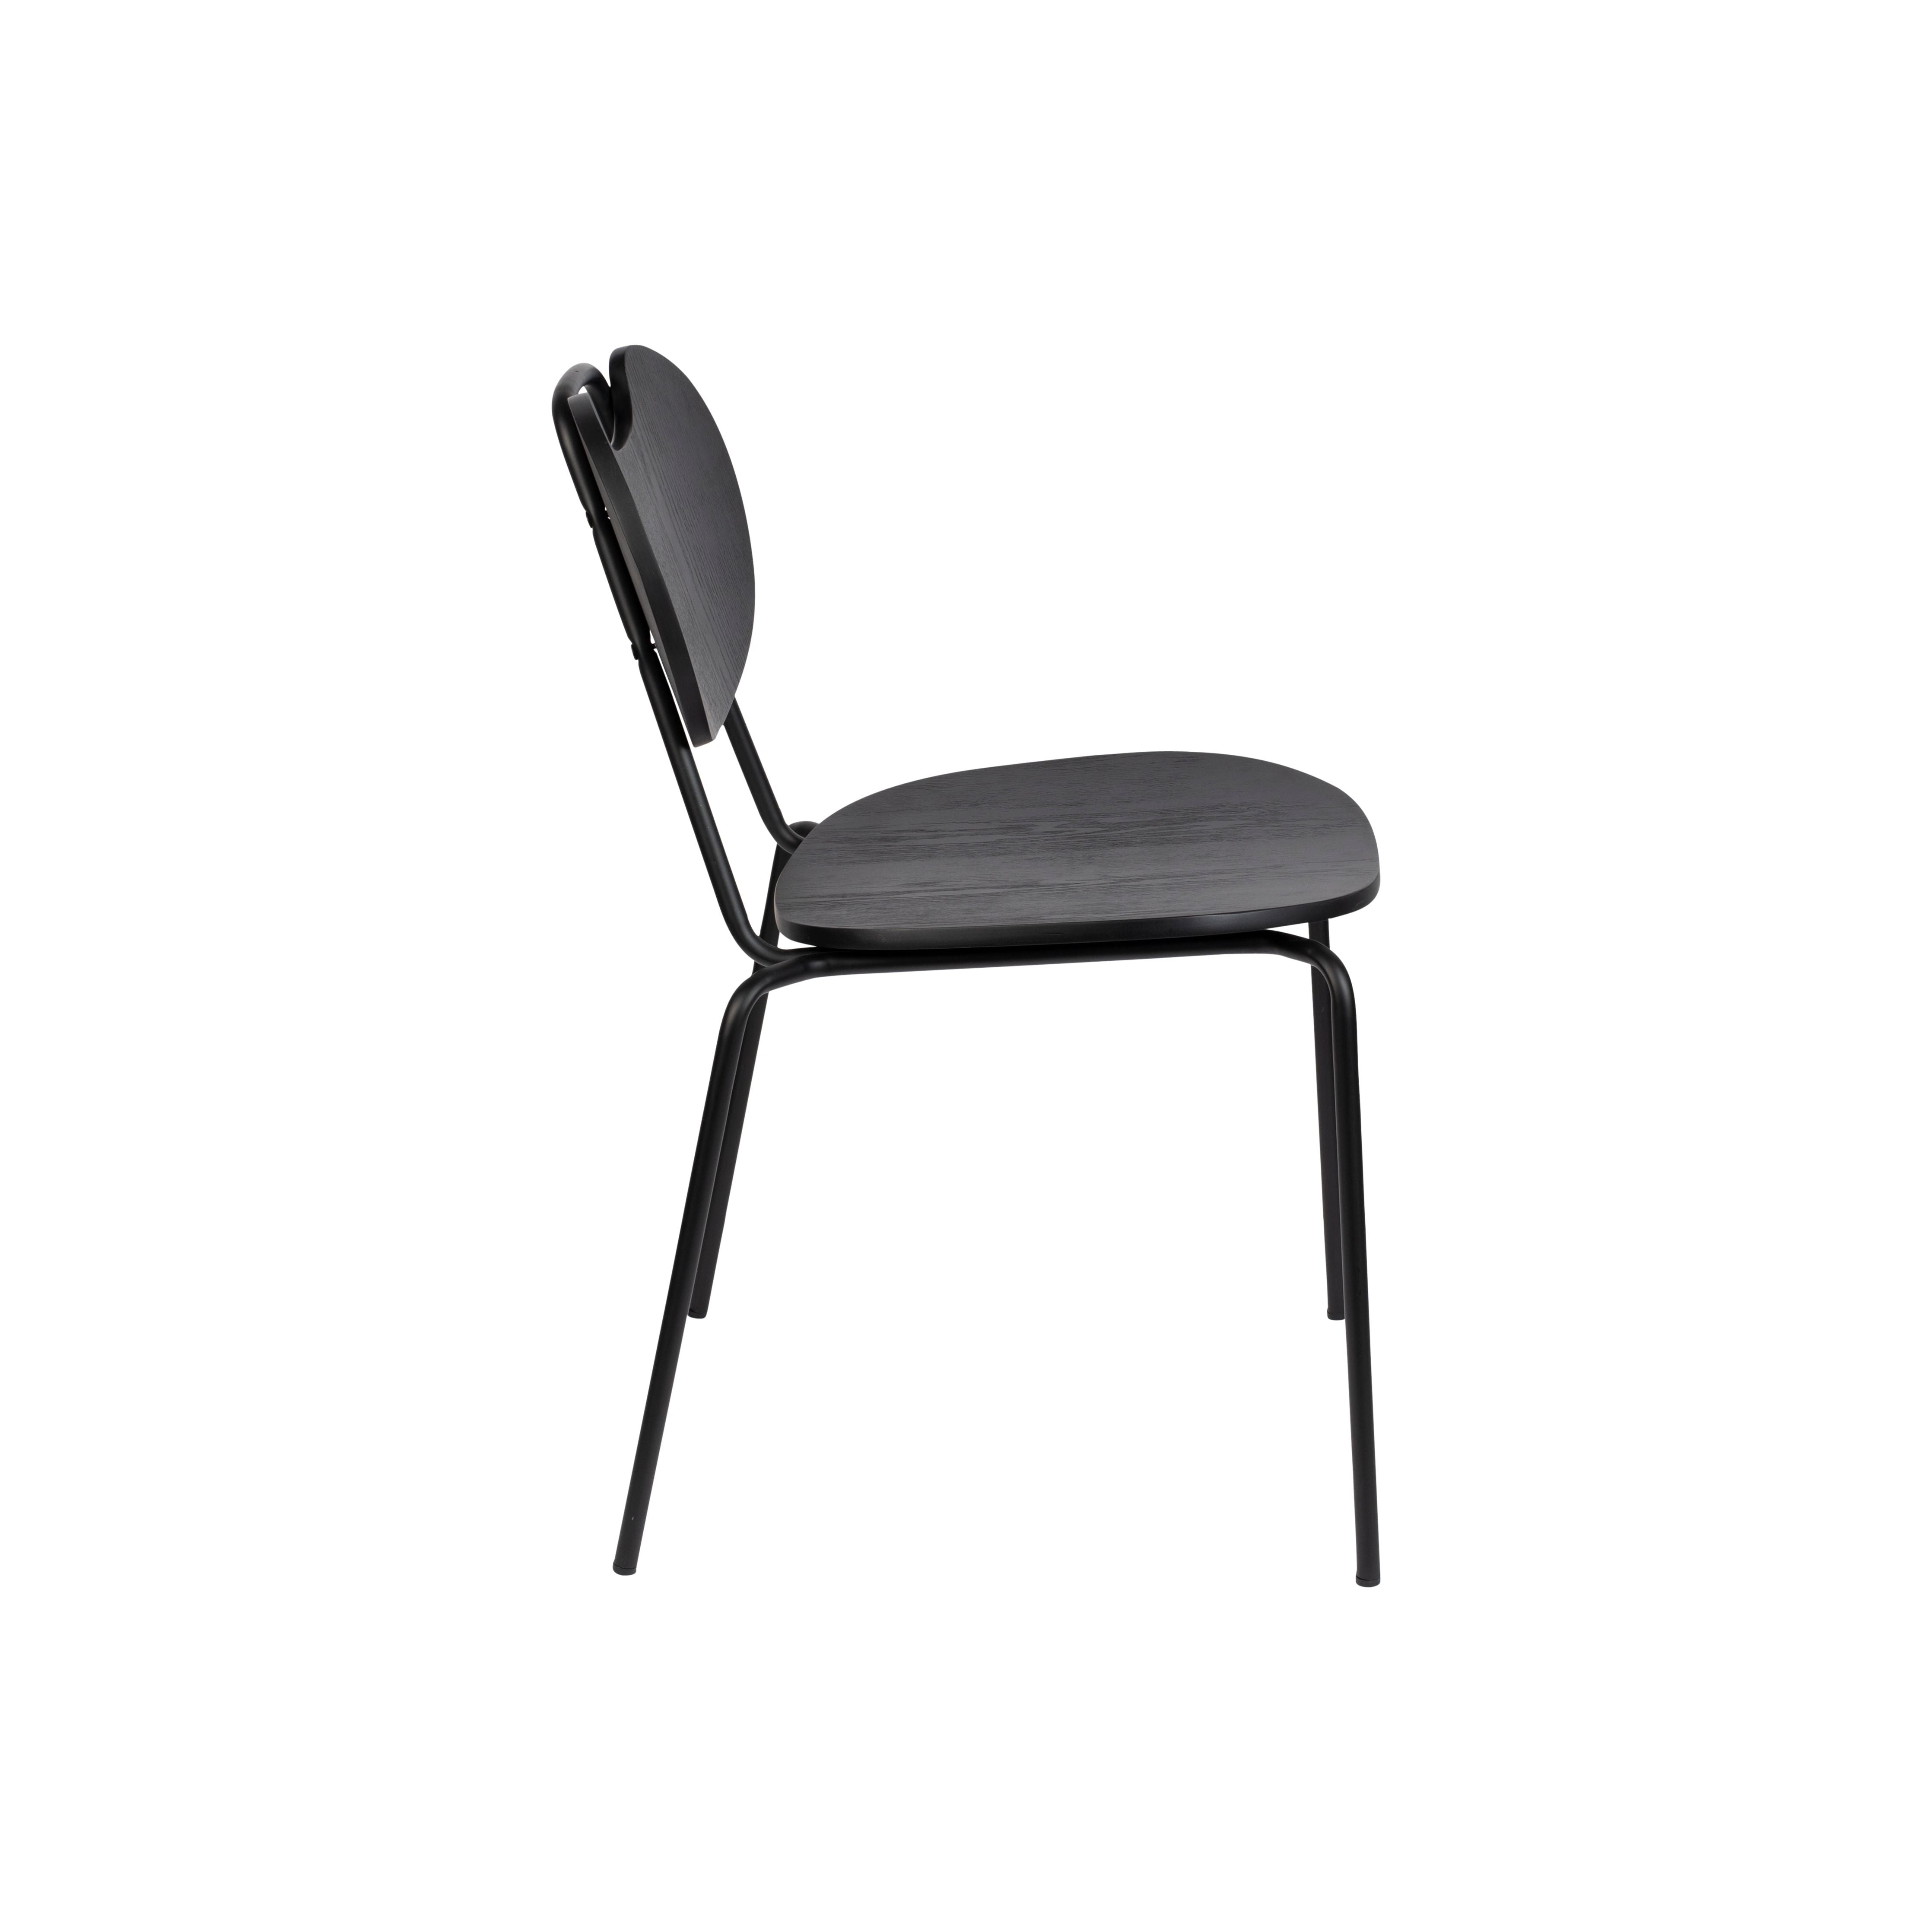 Chair aspen wood black